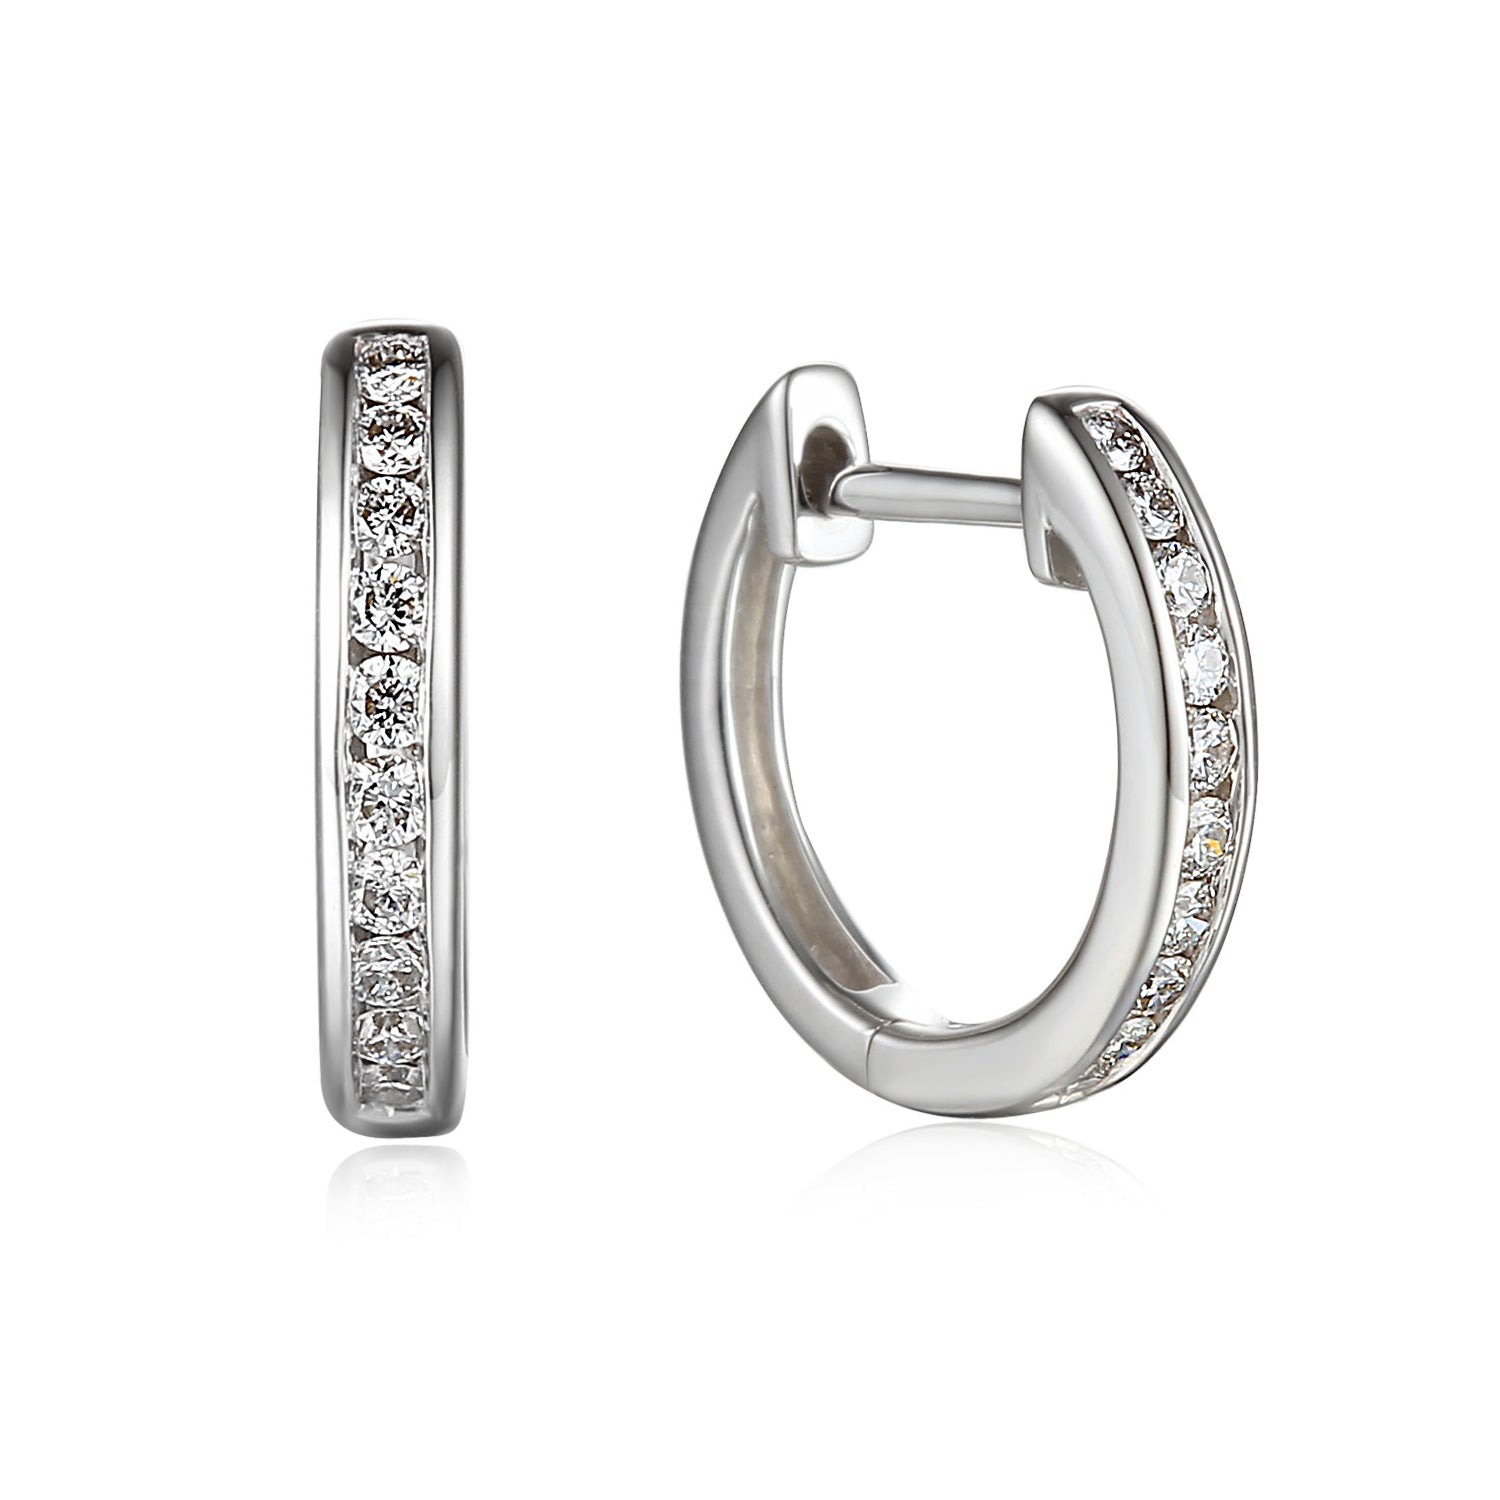 Hinged white gold diamond hoop earrings channel set round brilliant diamonds Harrogate jewellers Fogal and barnes 